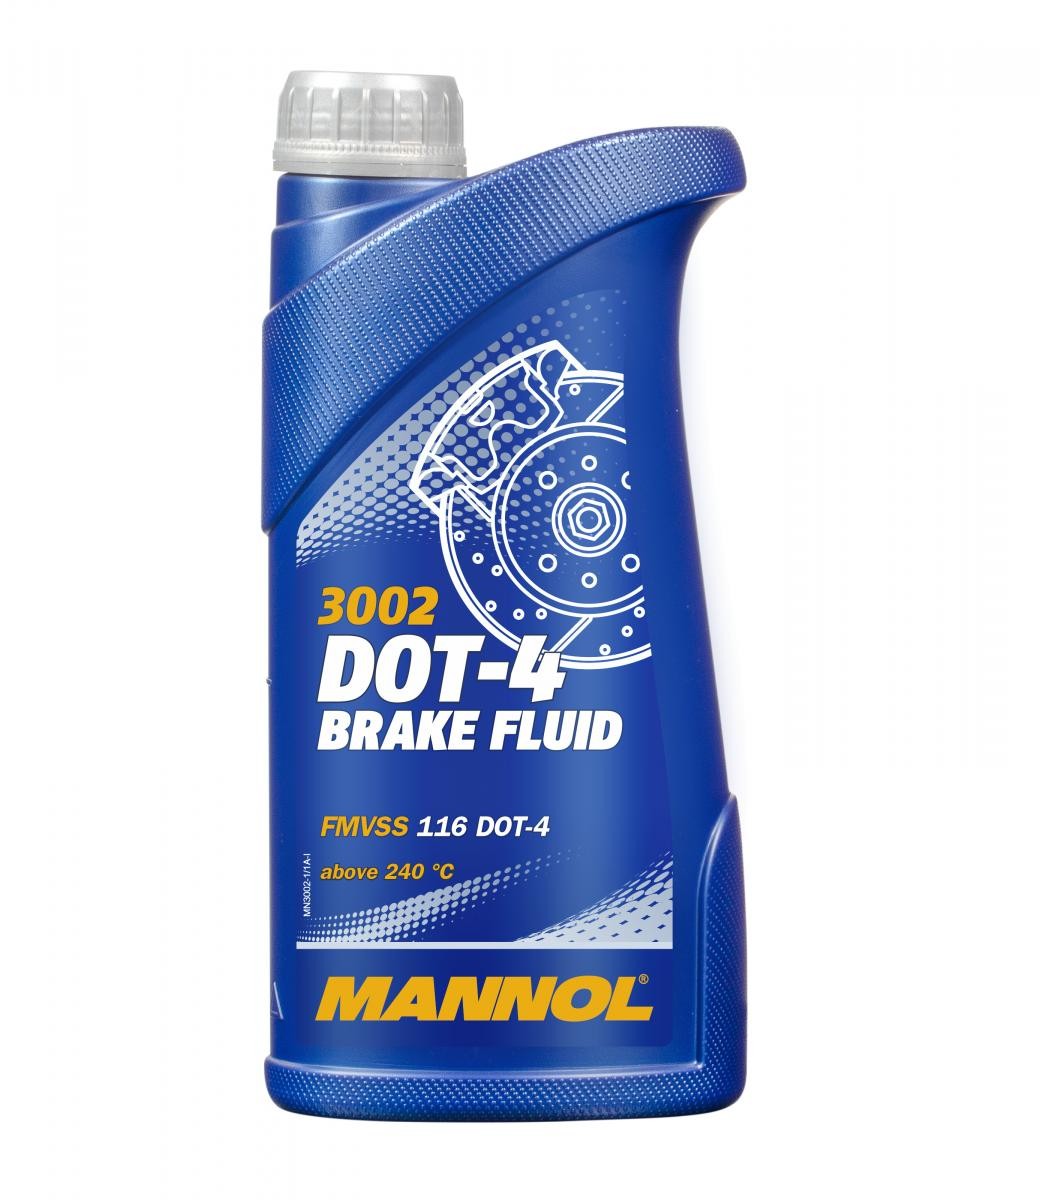 MANNOL DOT-4 BRAKE FLUID Bremsflüssigkeit 1l MN3002-1 YAMAHA Mofa Maxi-Scooter